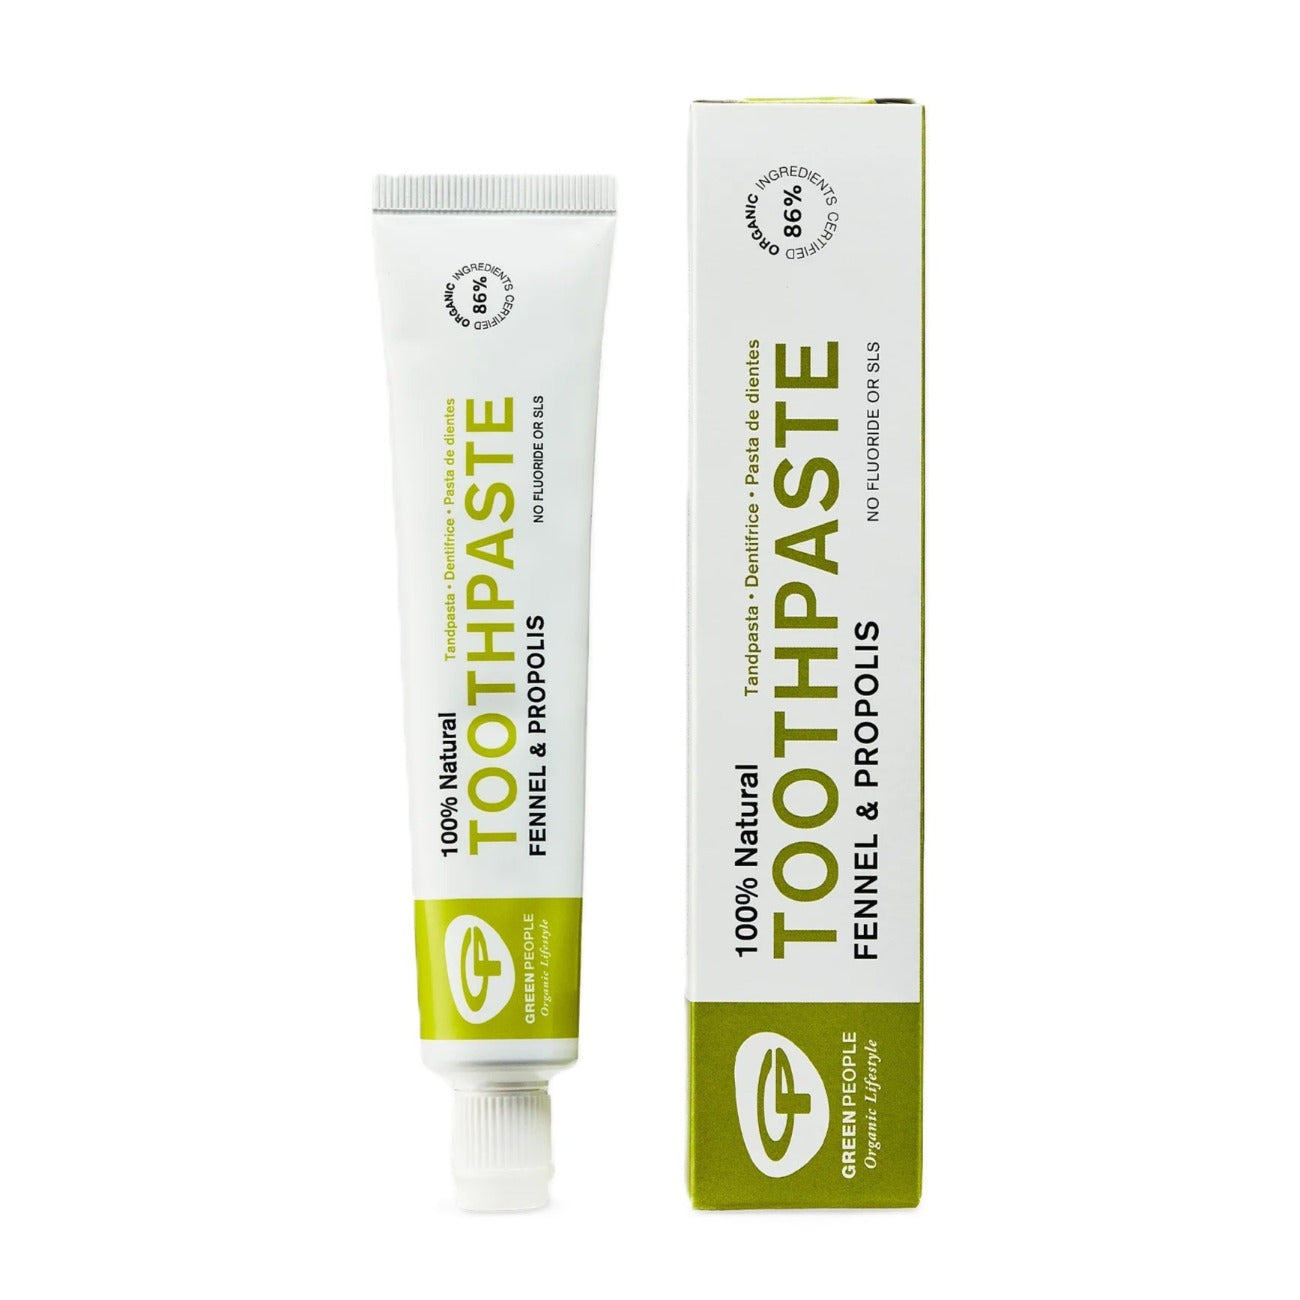 Toothpaste Fennel & Propolis 50ml